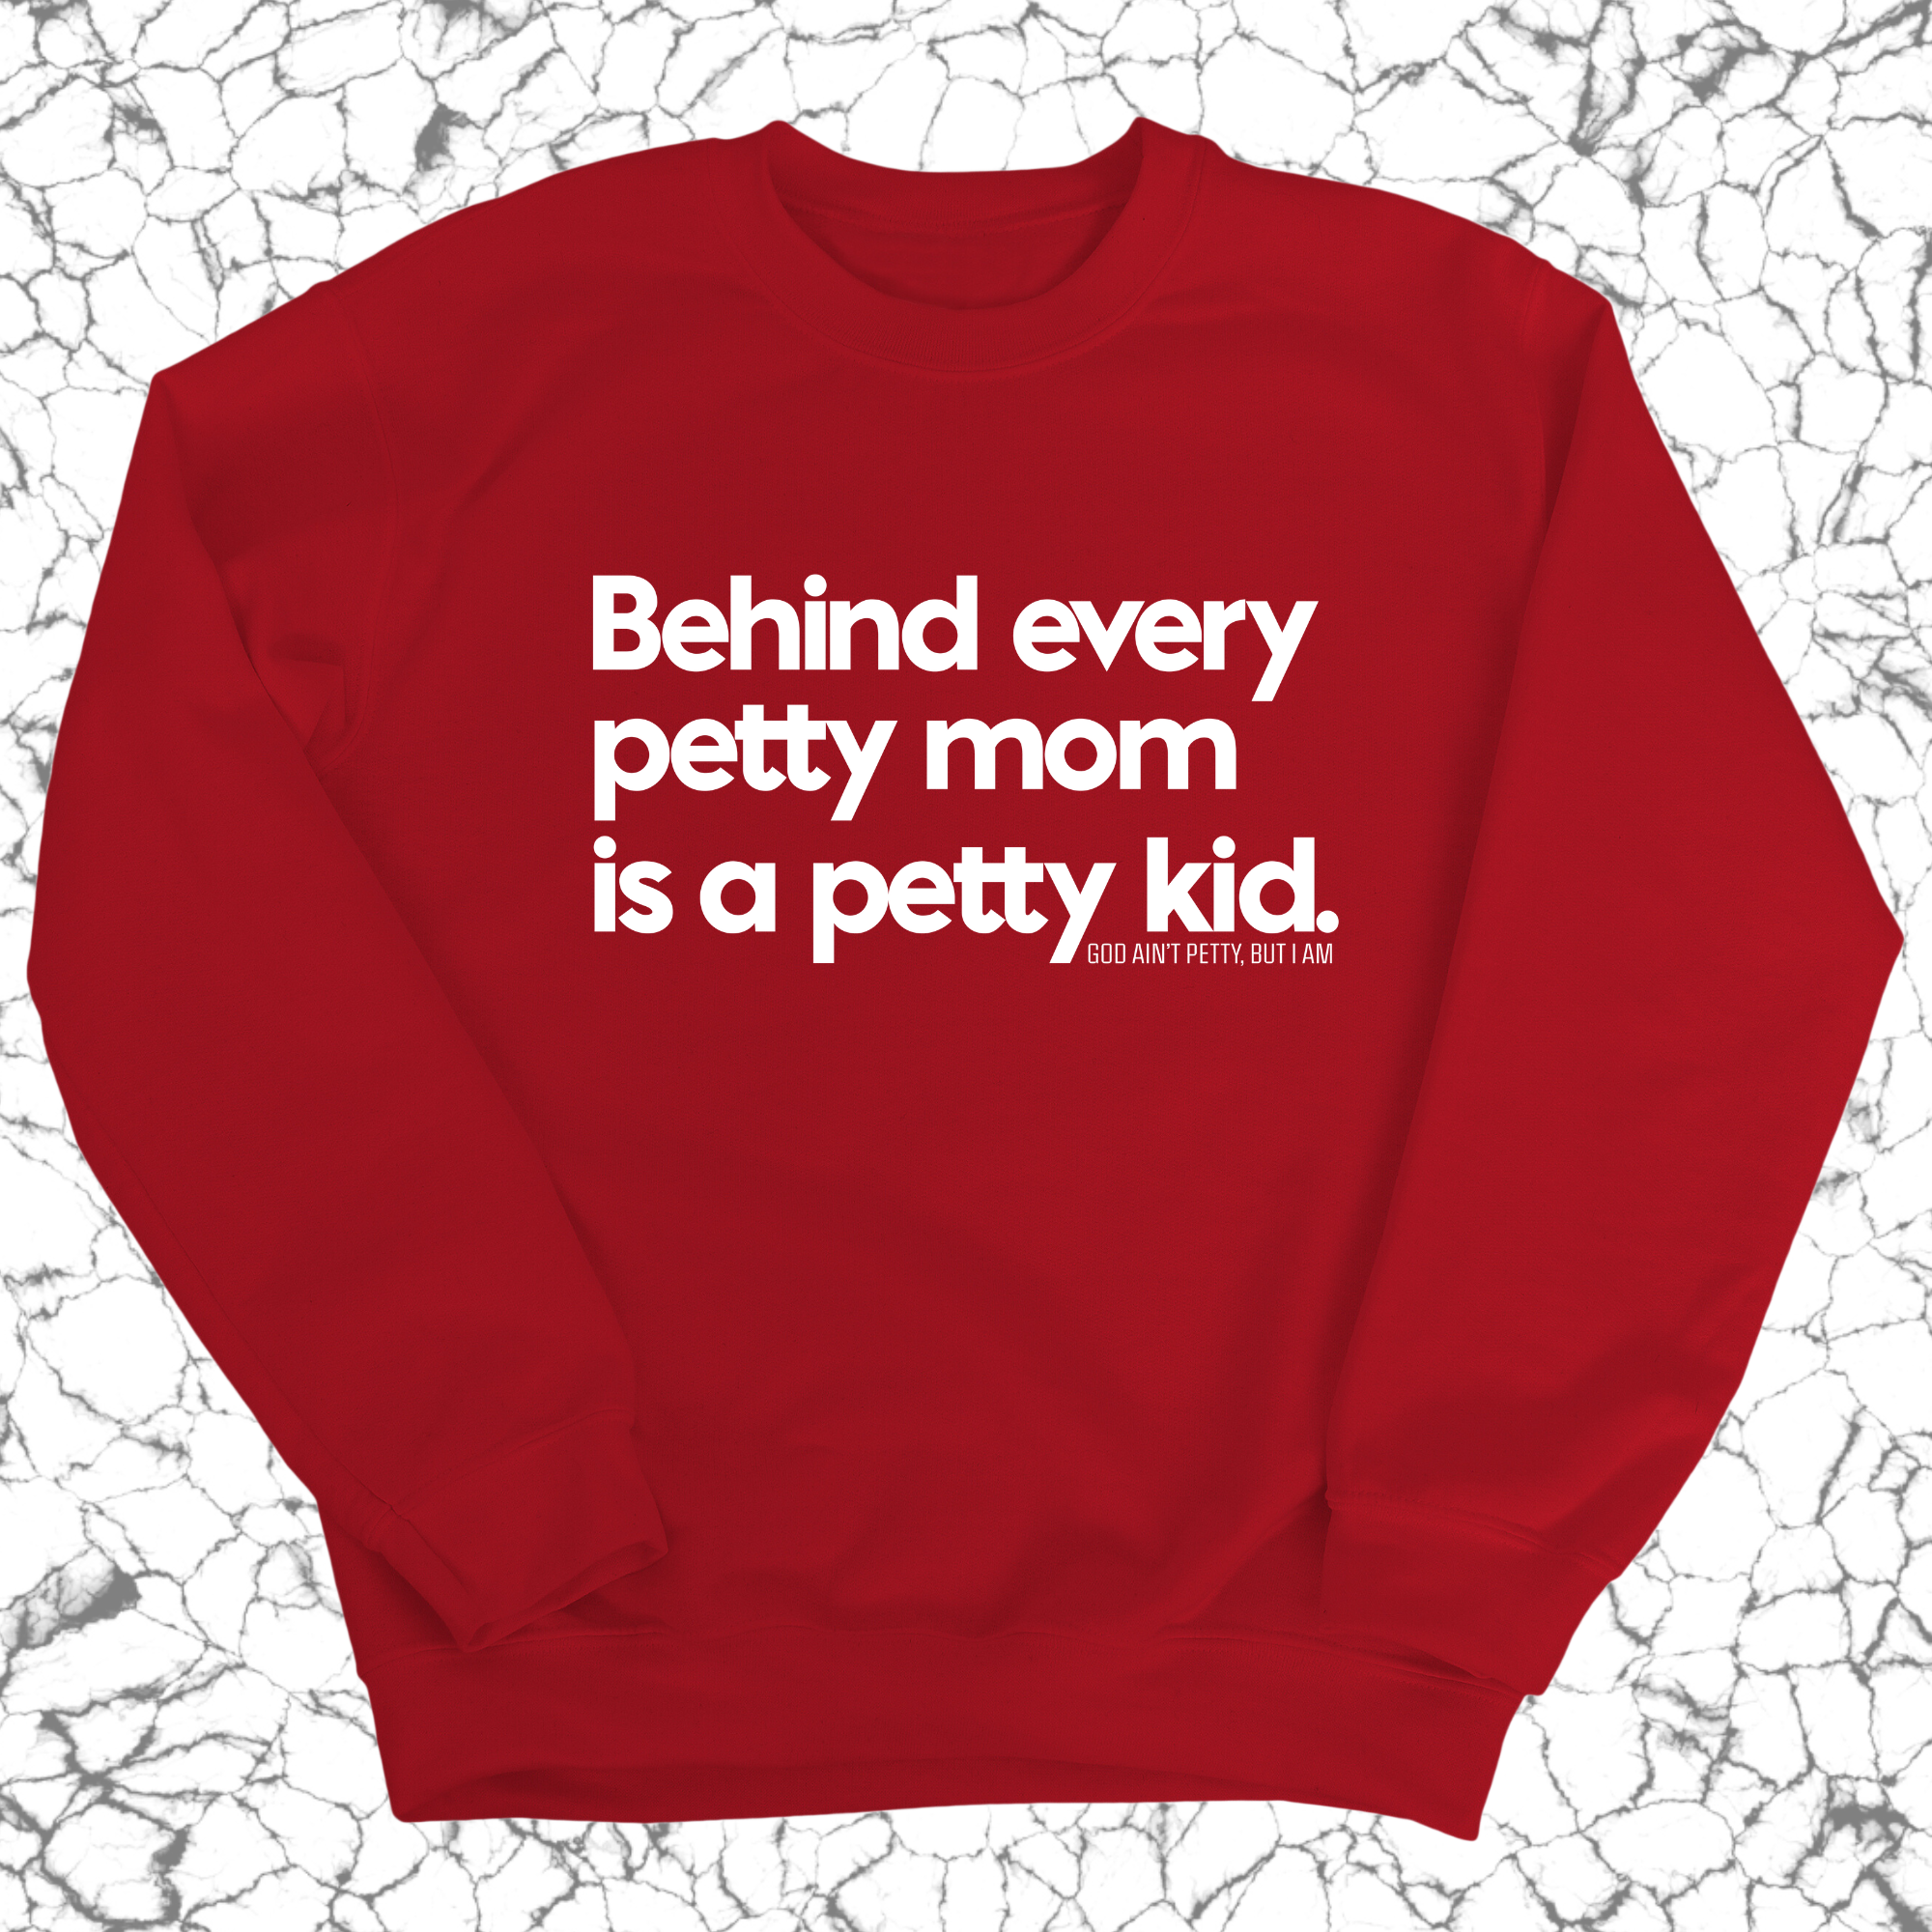 Behind every petty mom is a petty kid Unisex Sweatshirt-Sweatshirt-The Original God Ain't Petty But I Am